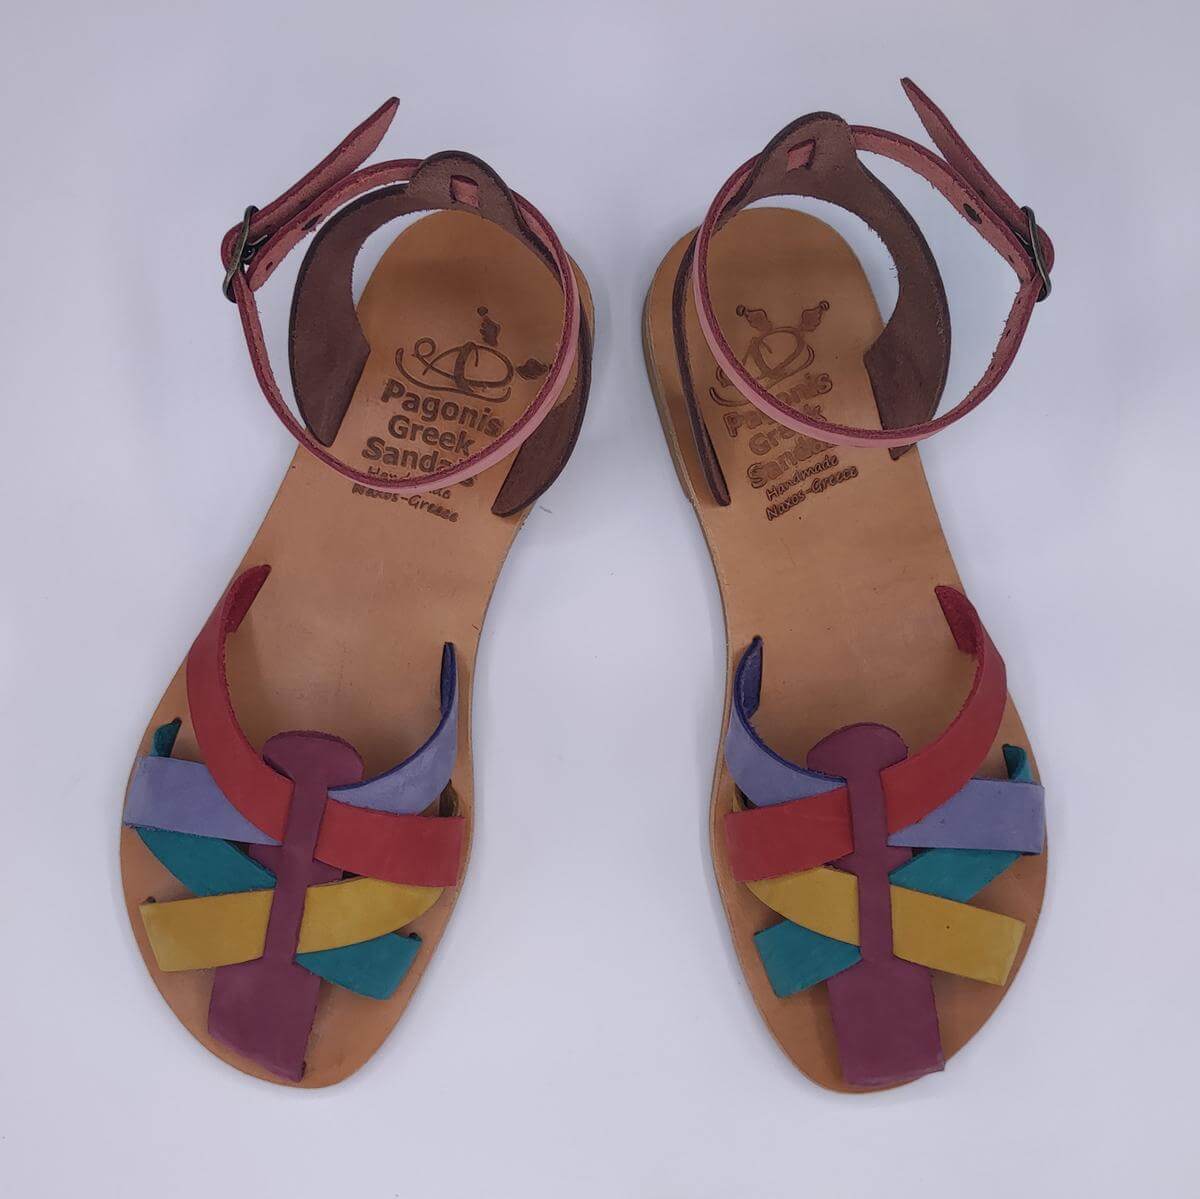 Lefkoni Closed toe leather sandal Multicolor